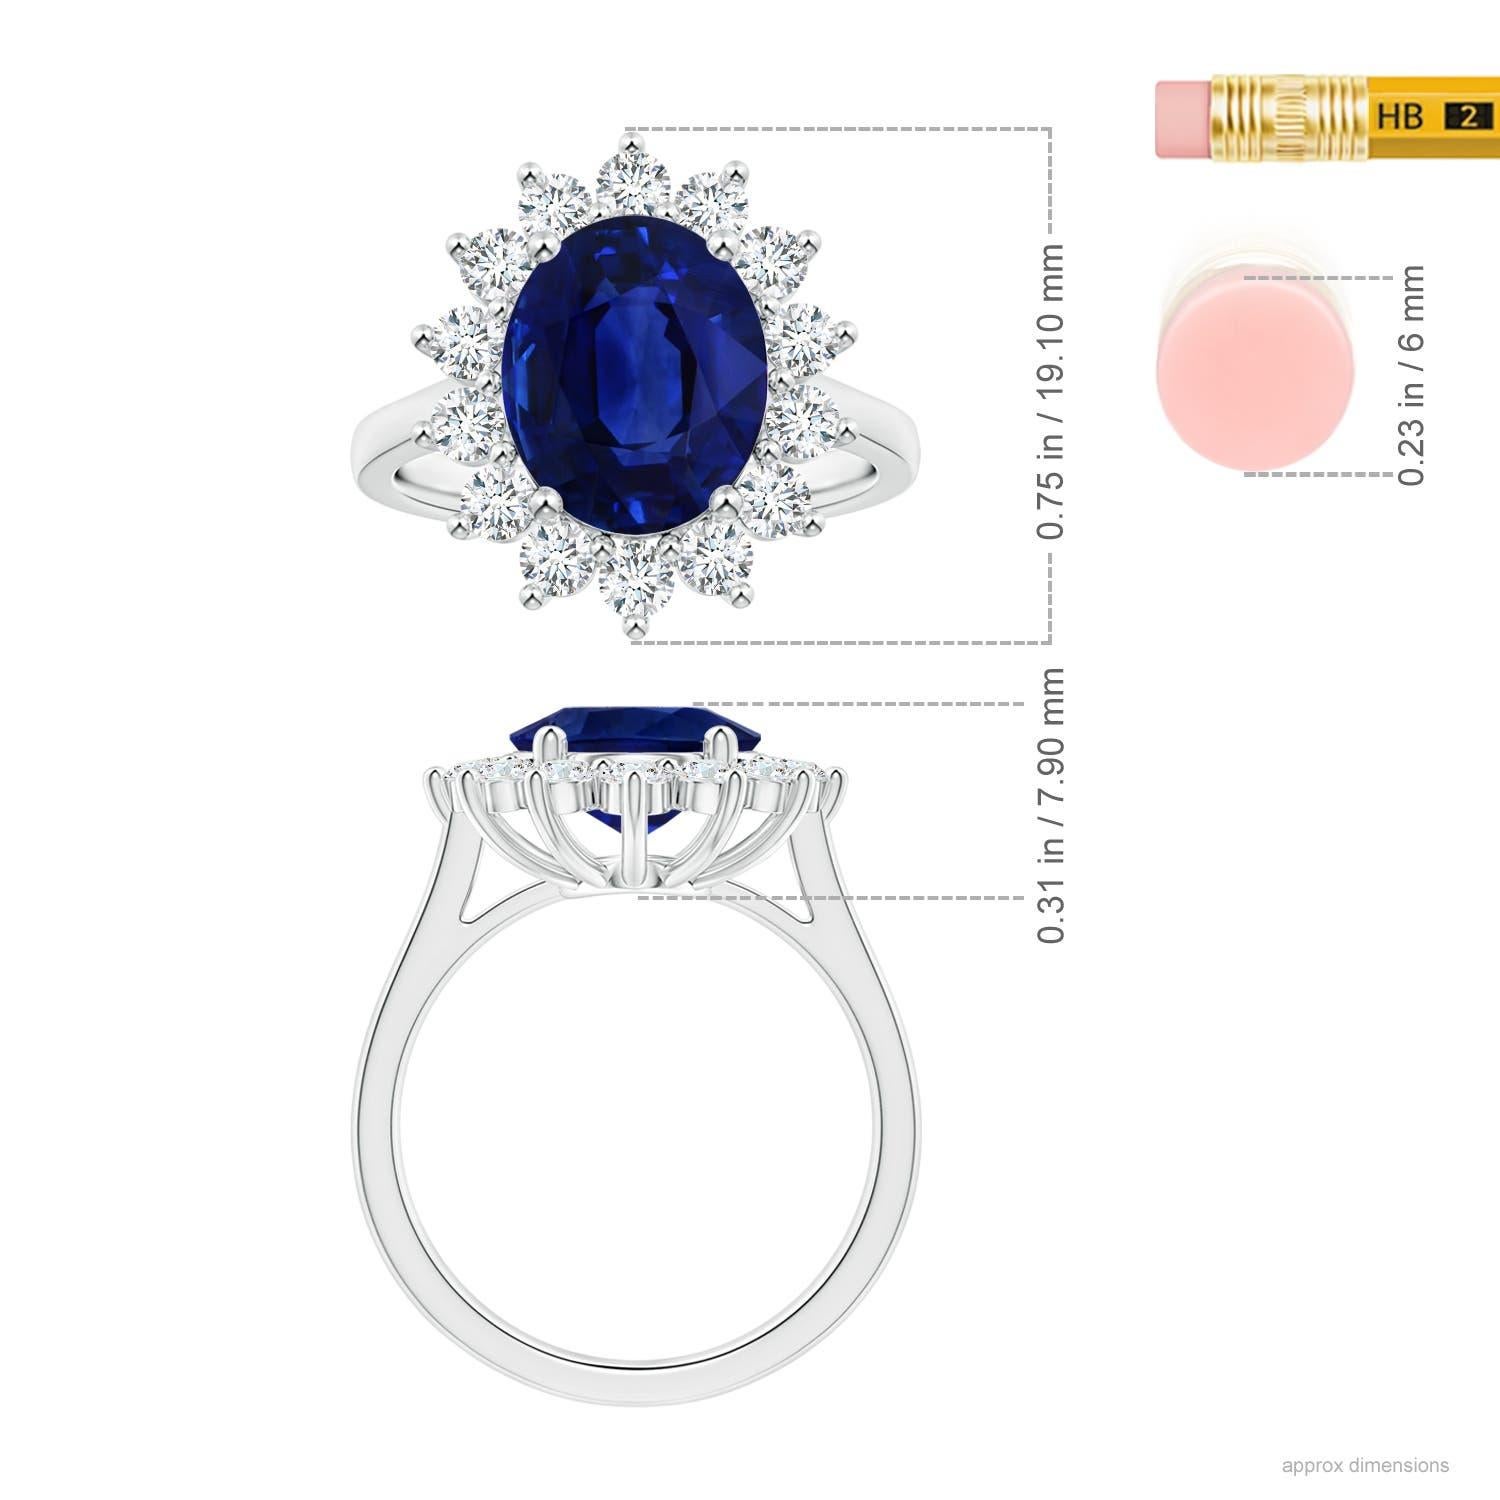 Im Angebot: ANGARA Prinzessin Diana inspirierter GIA-zertifizierter Saphir-Halo-Ring aus Platin () 5